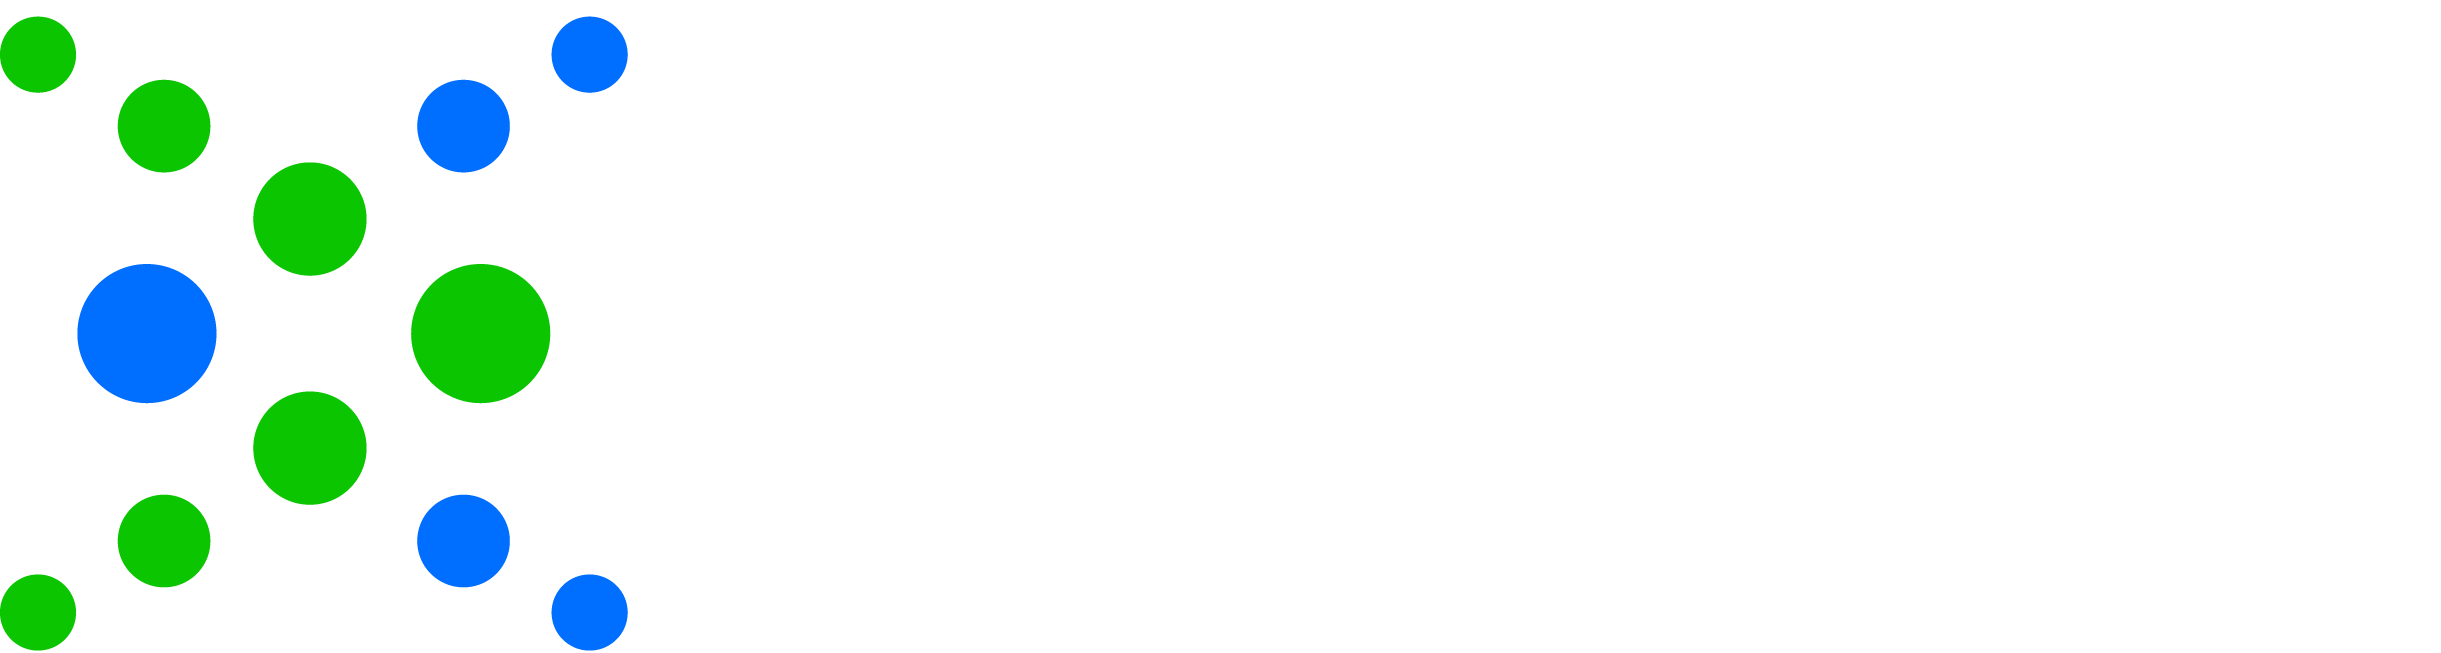 Nacha logo